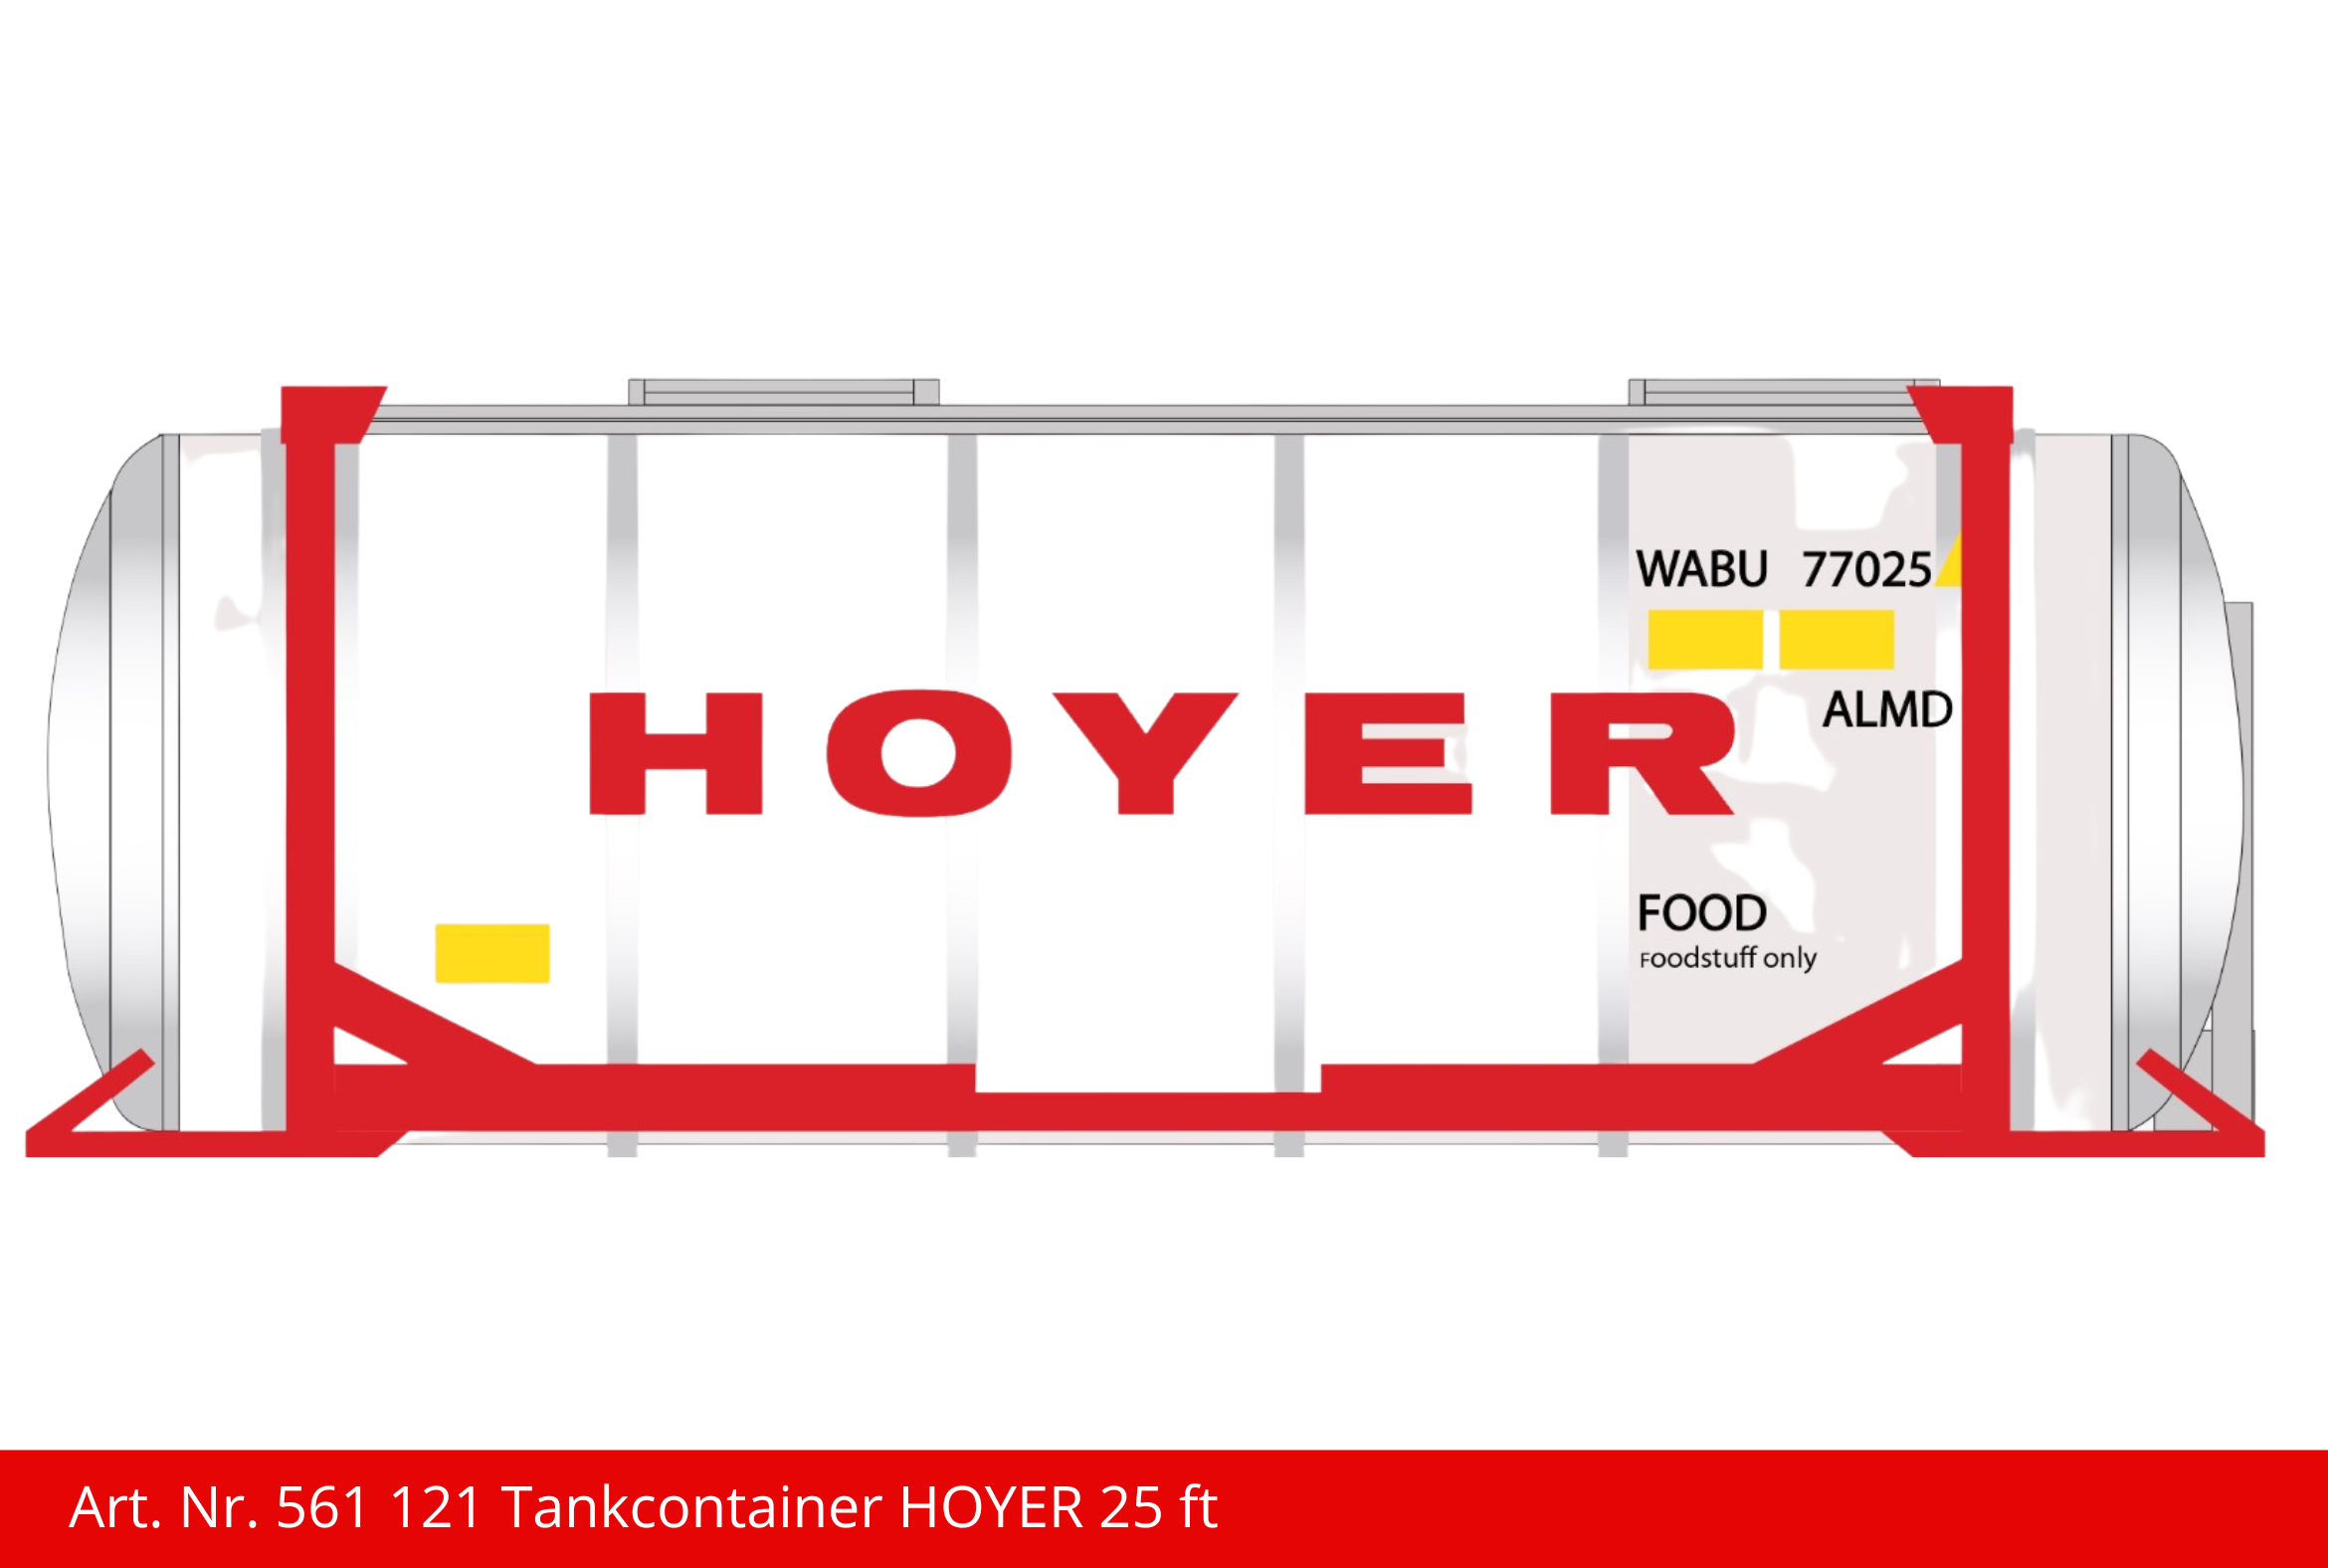 https://kiss-modellbahnen-schweiz.ch/wp-content/uploads/2023/02/Art.-Nr.-561-121-Tankcontainer-HOYER-25-ft.png